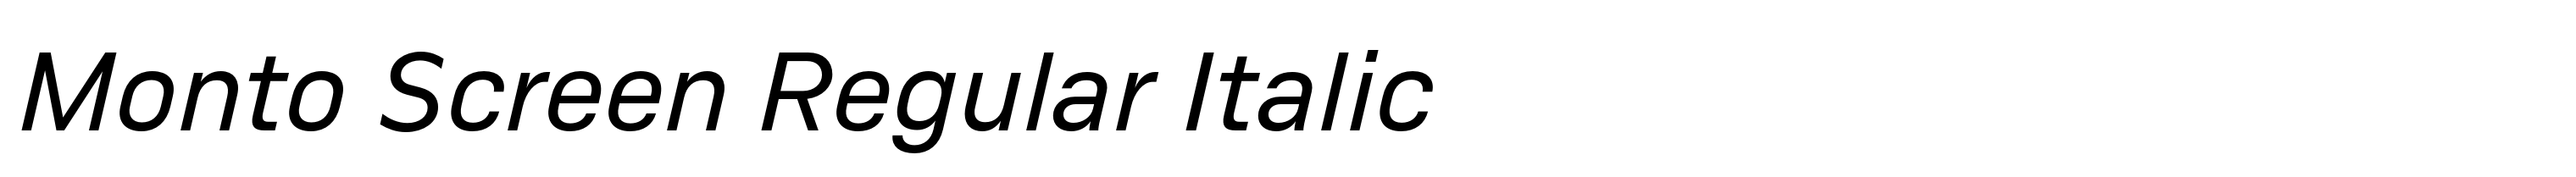 Monto Screen Regular Italic